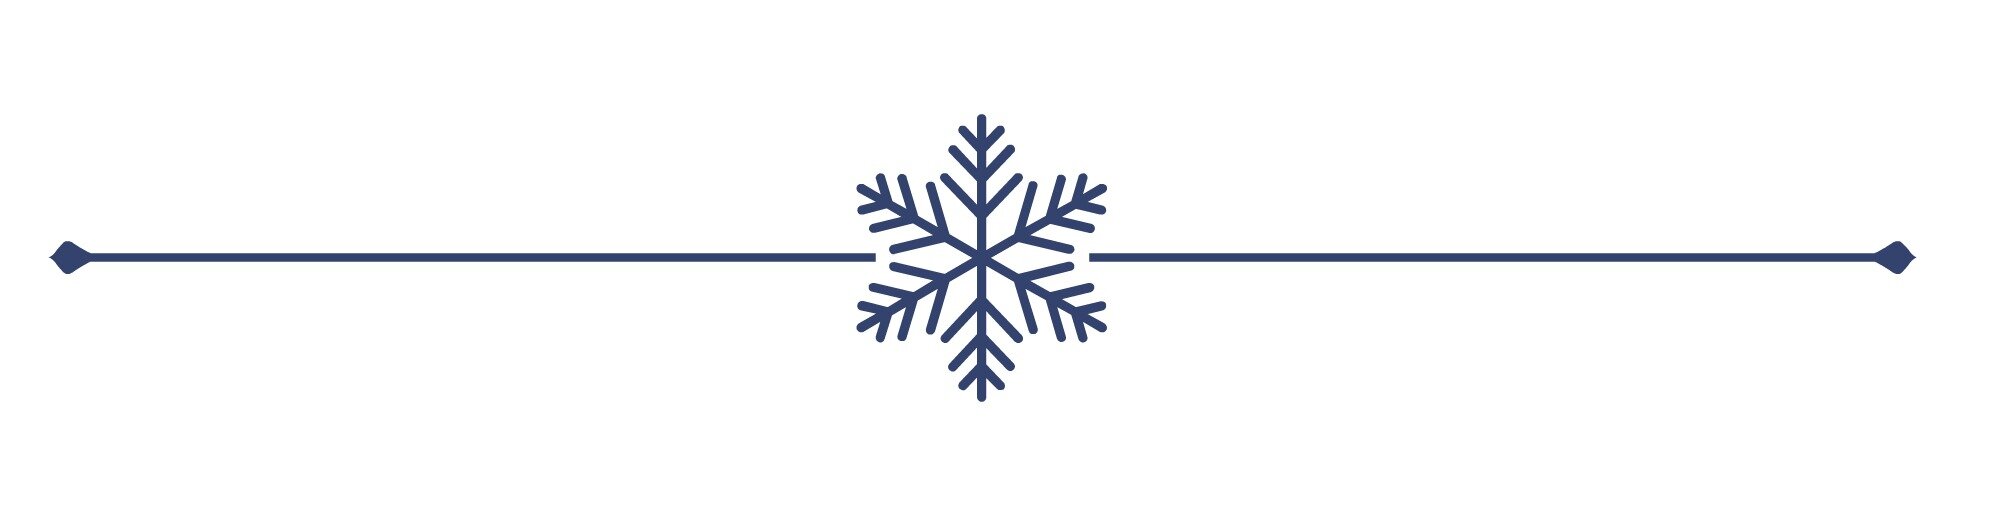 snowflake-clipart-divider-8.jpg